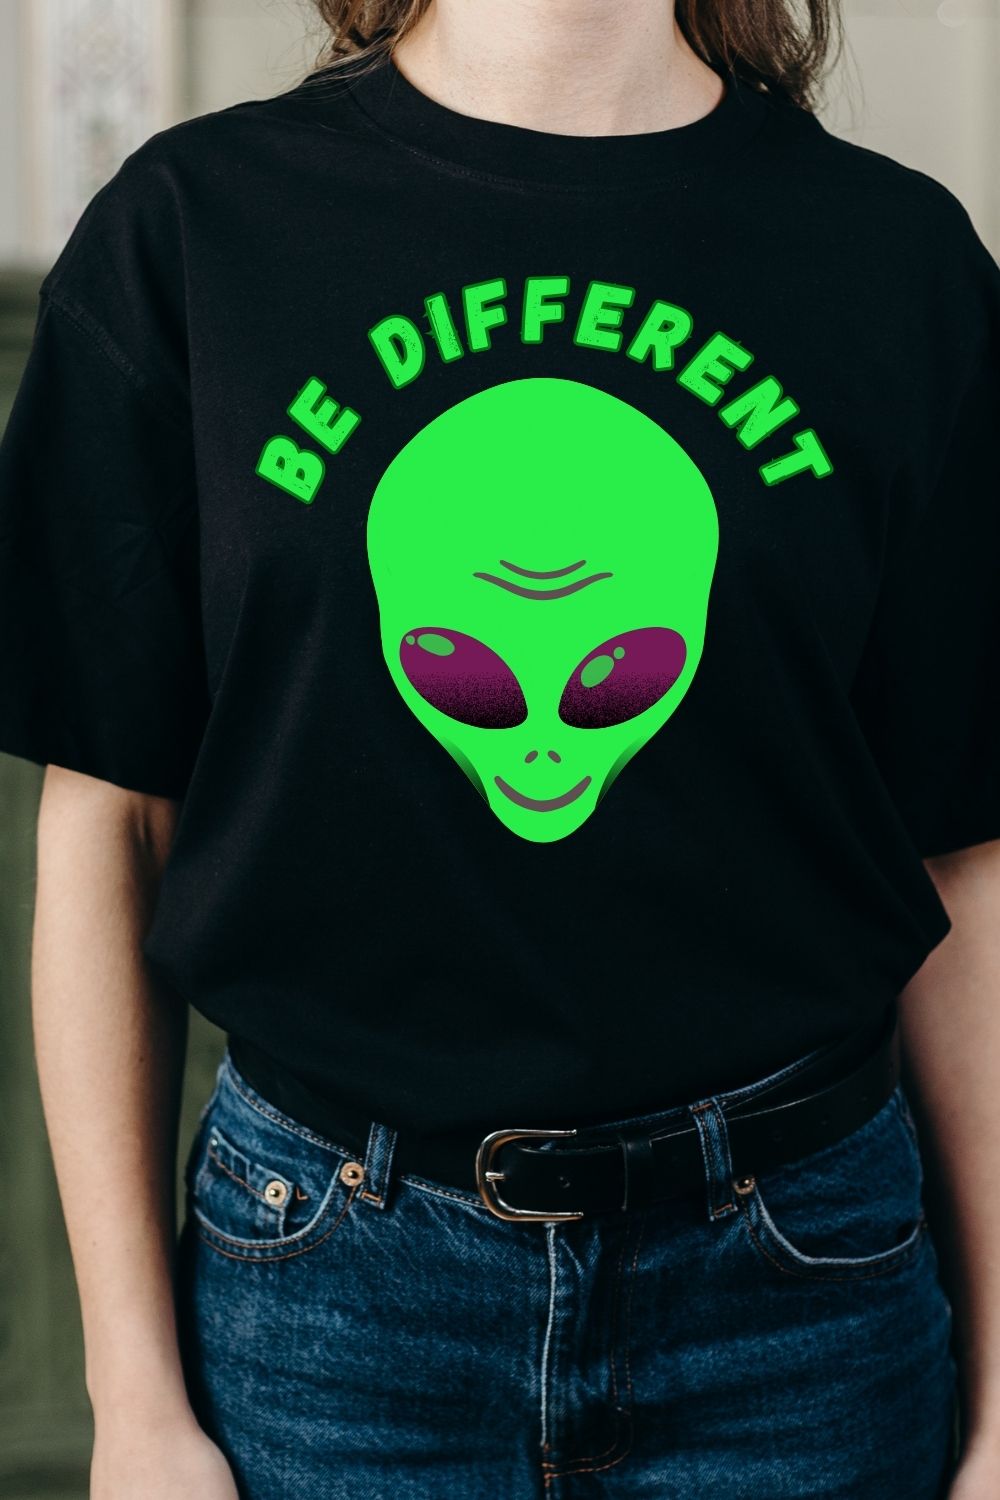 Alien t shirt design pinterest preview image.